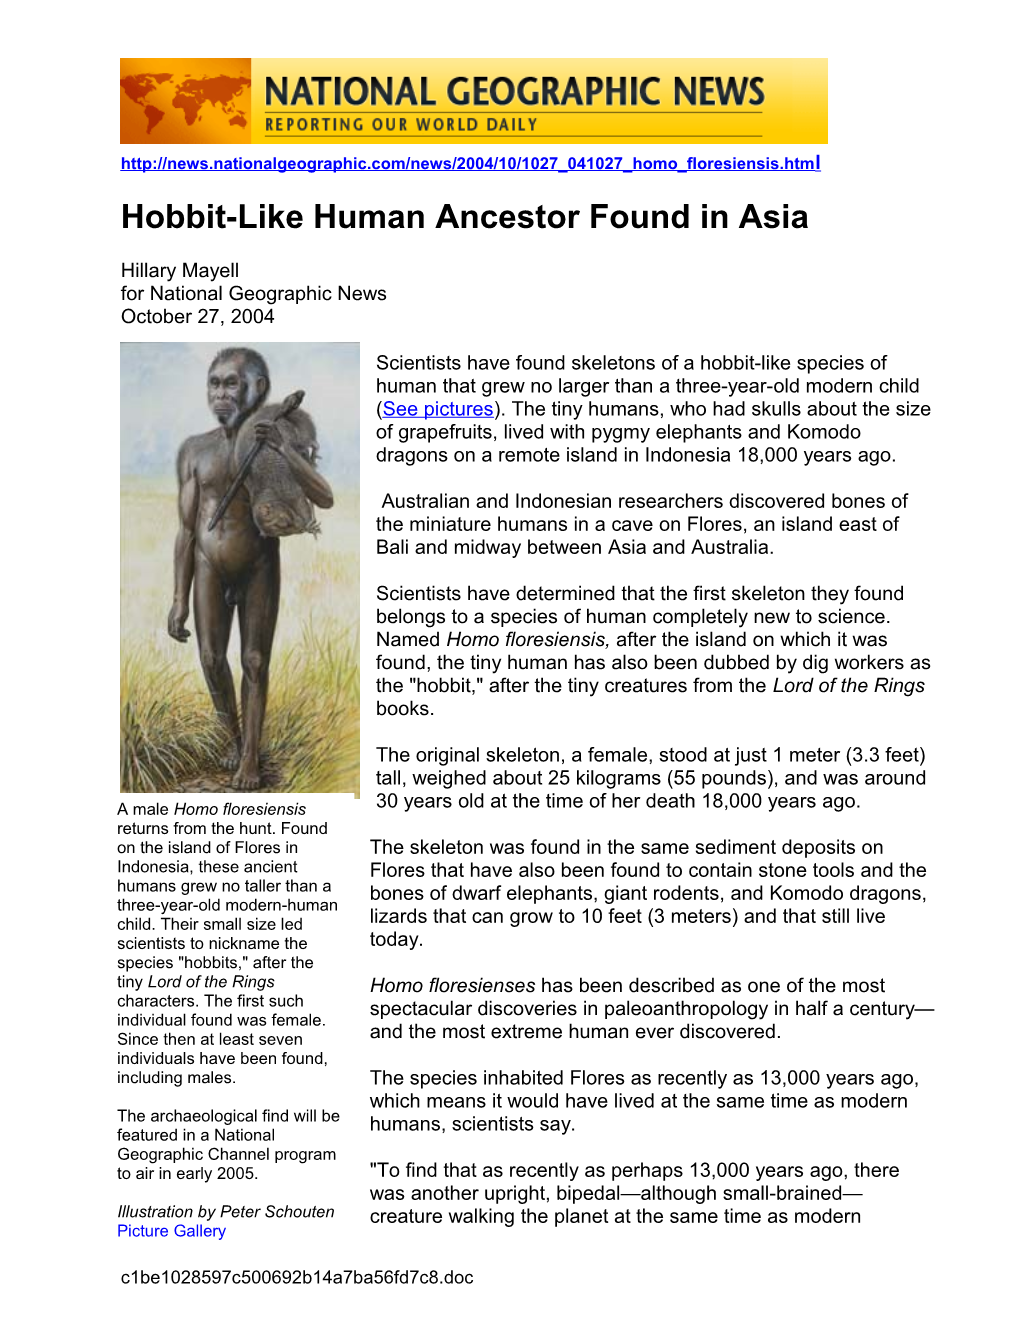 Hobbit-Like Human Ancestor Found in Asia